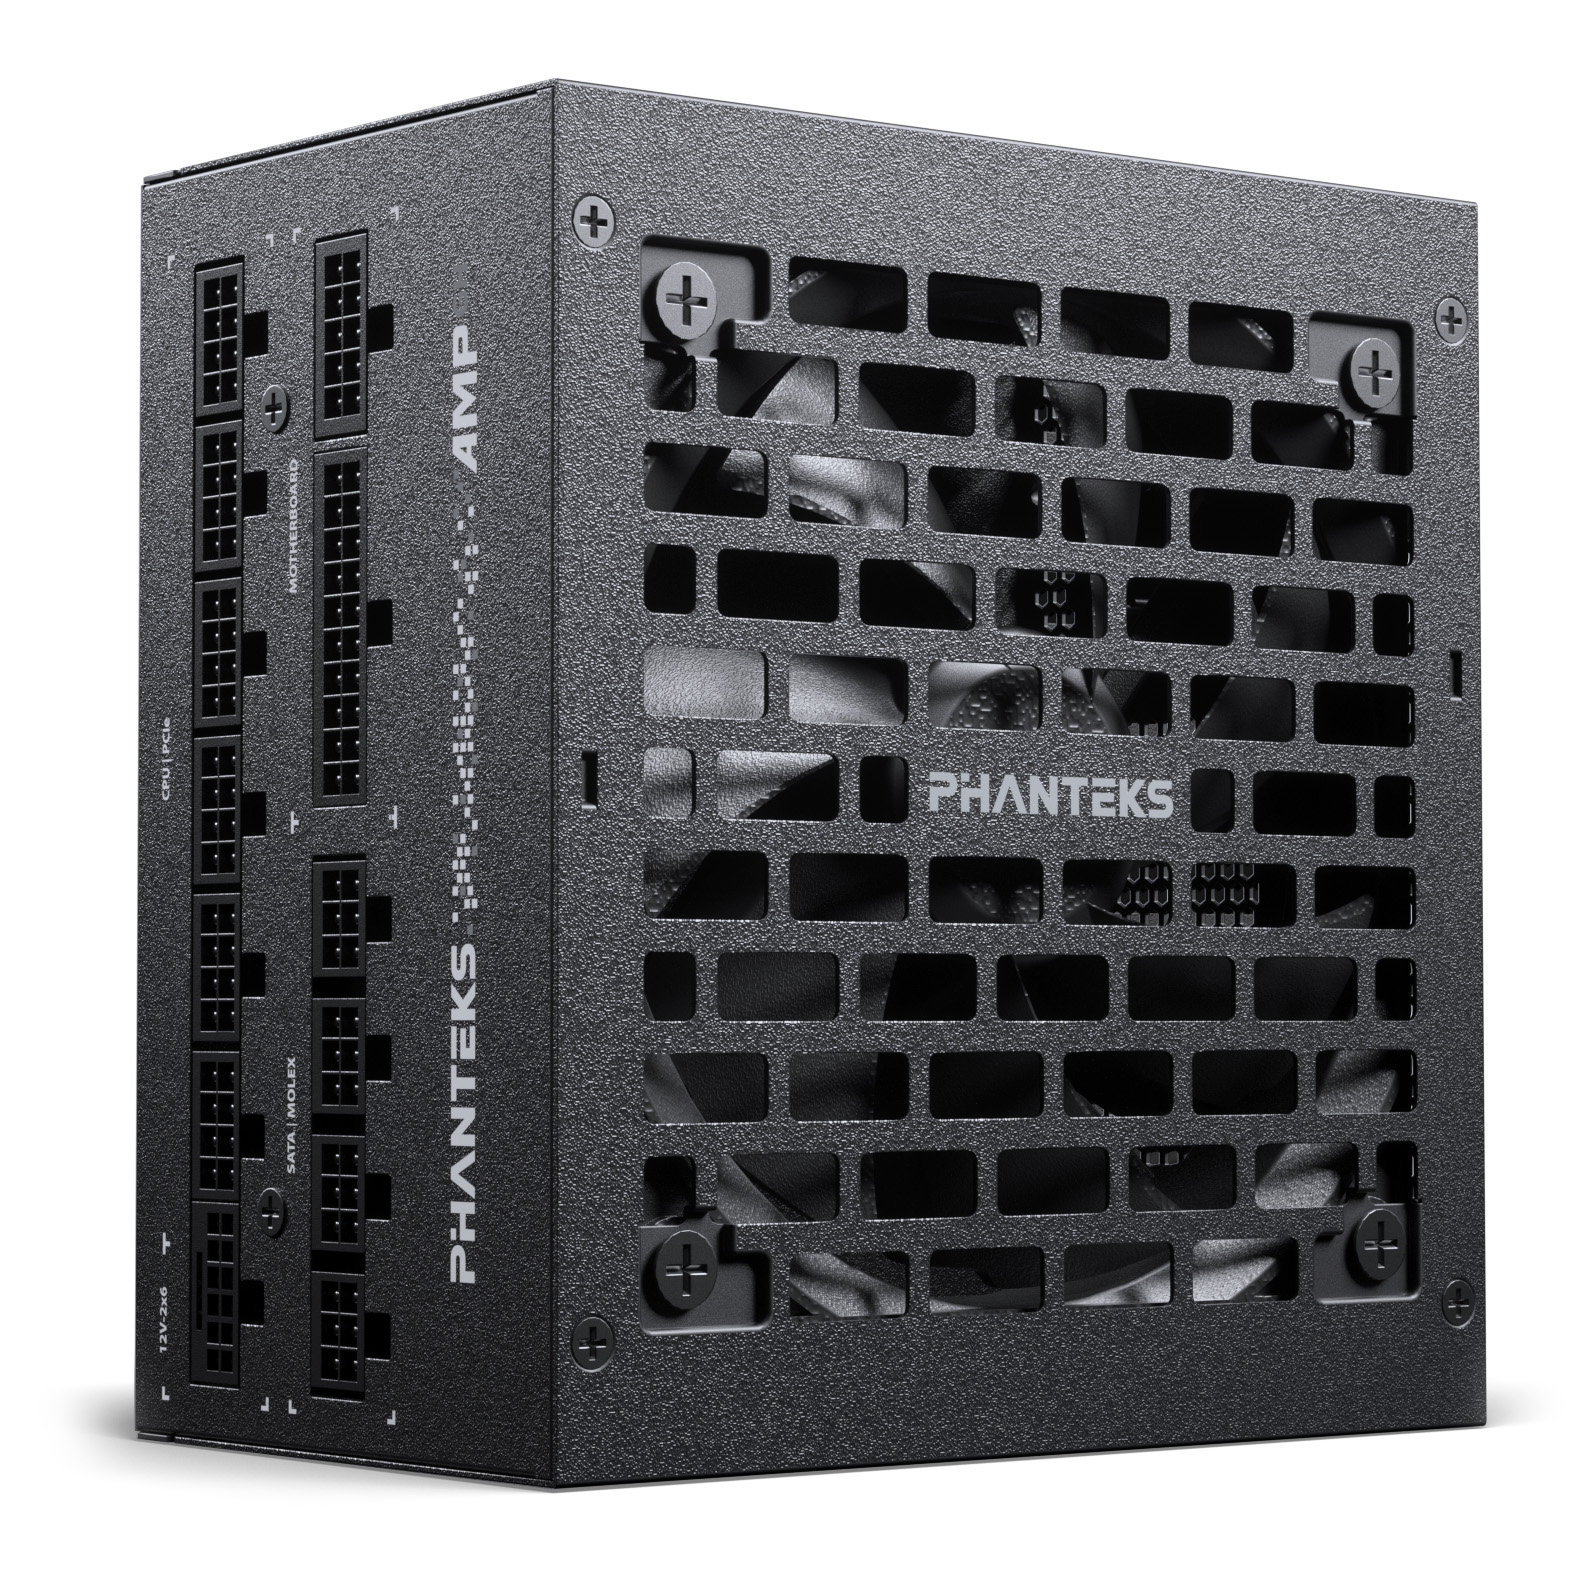 Phanteks AMP GH 1000W 80PLUS Platinum ATX Power Supply Modular - Black